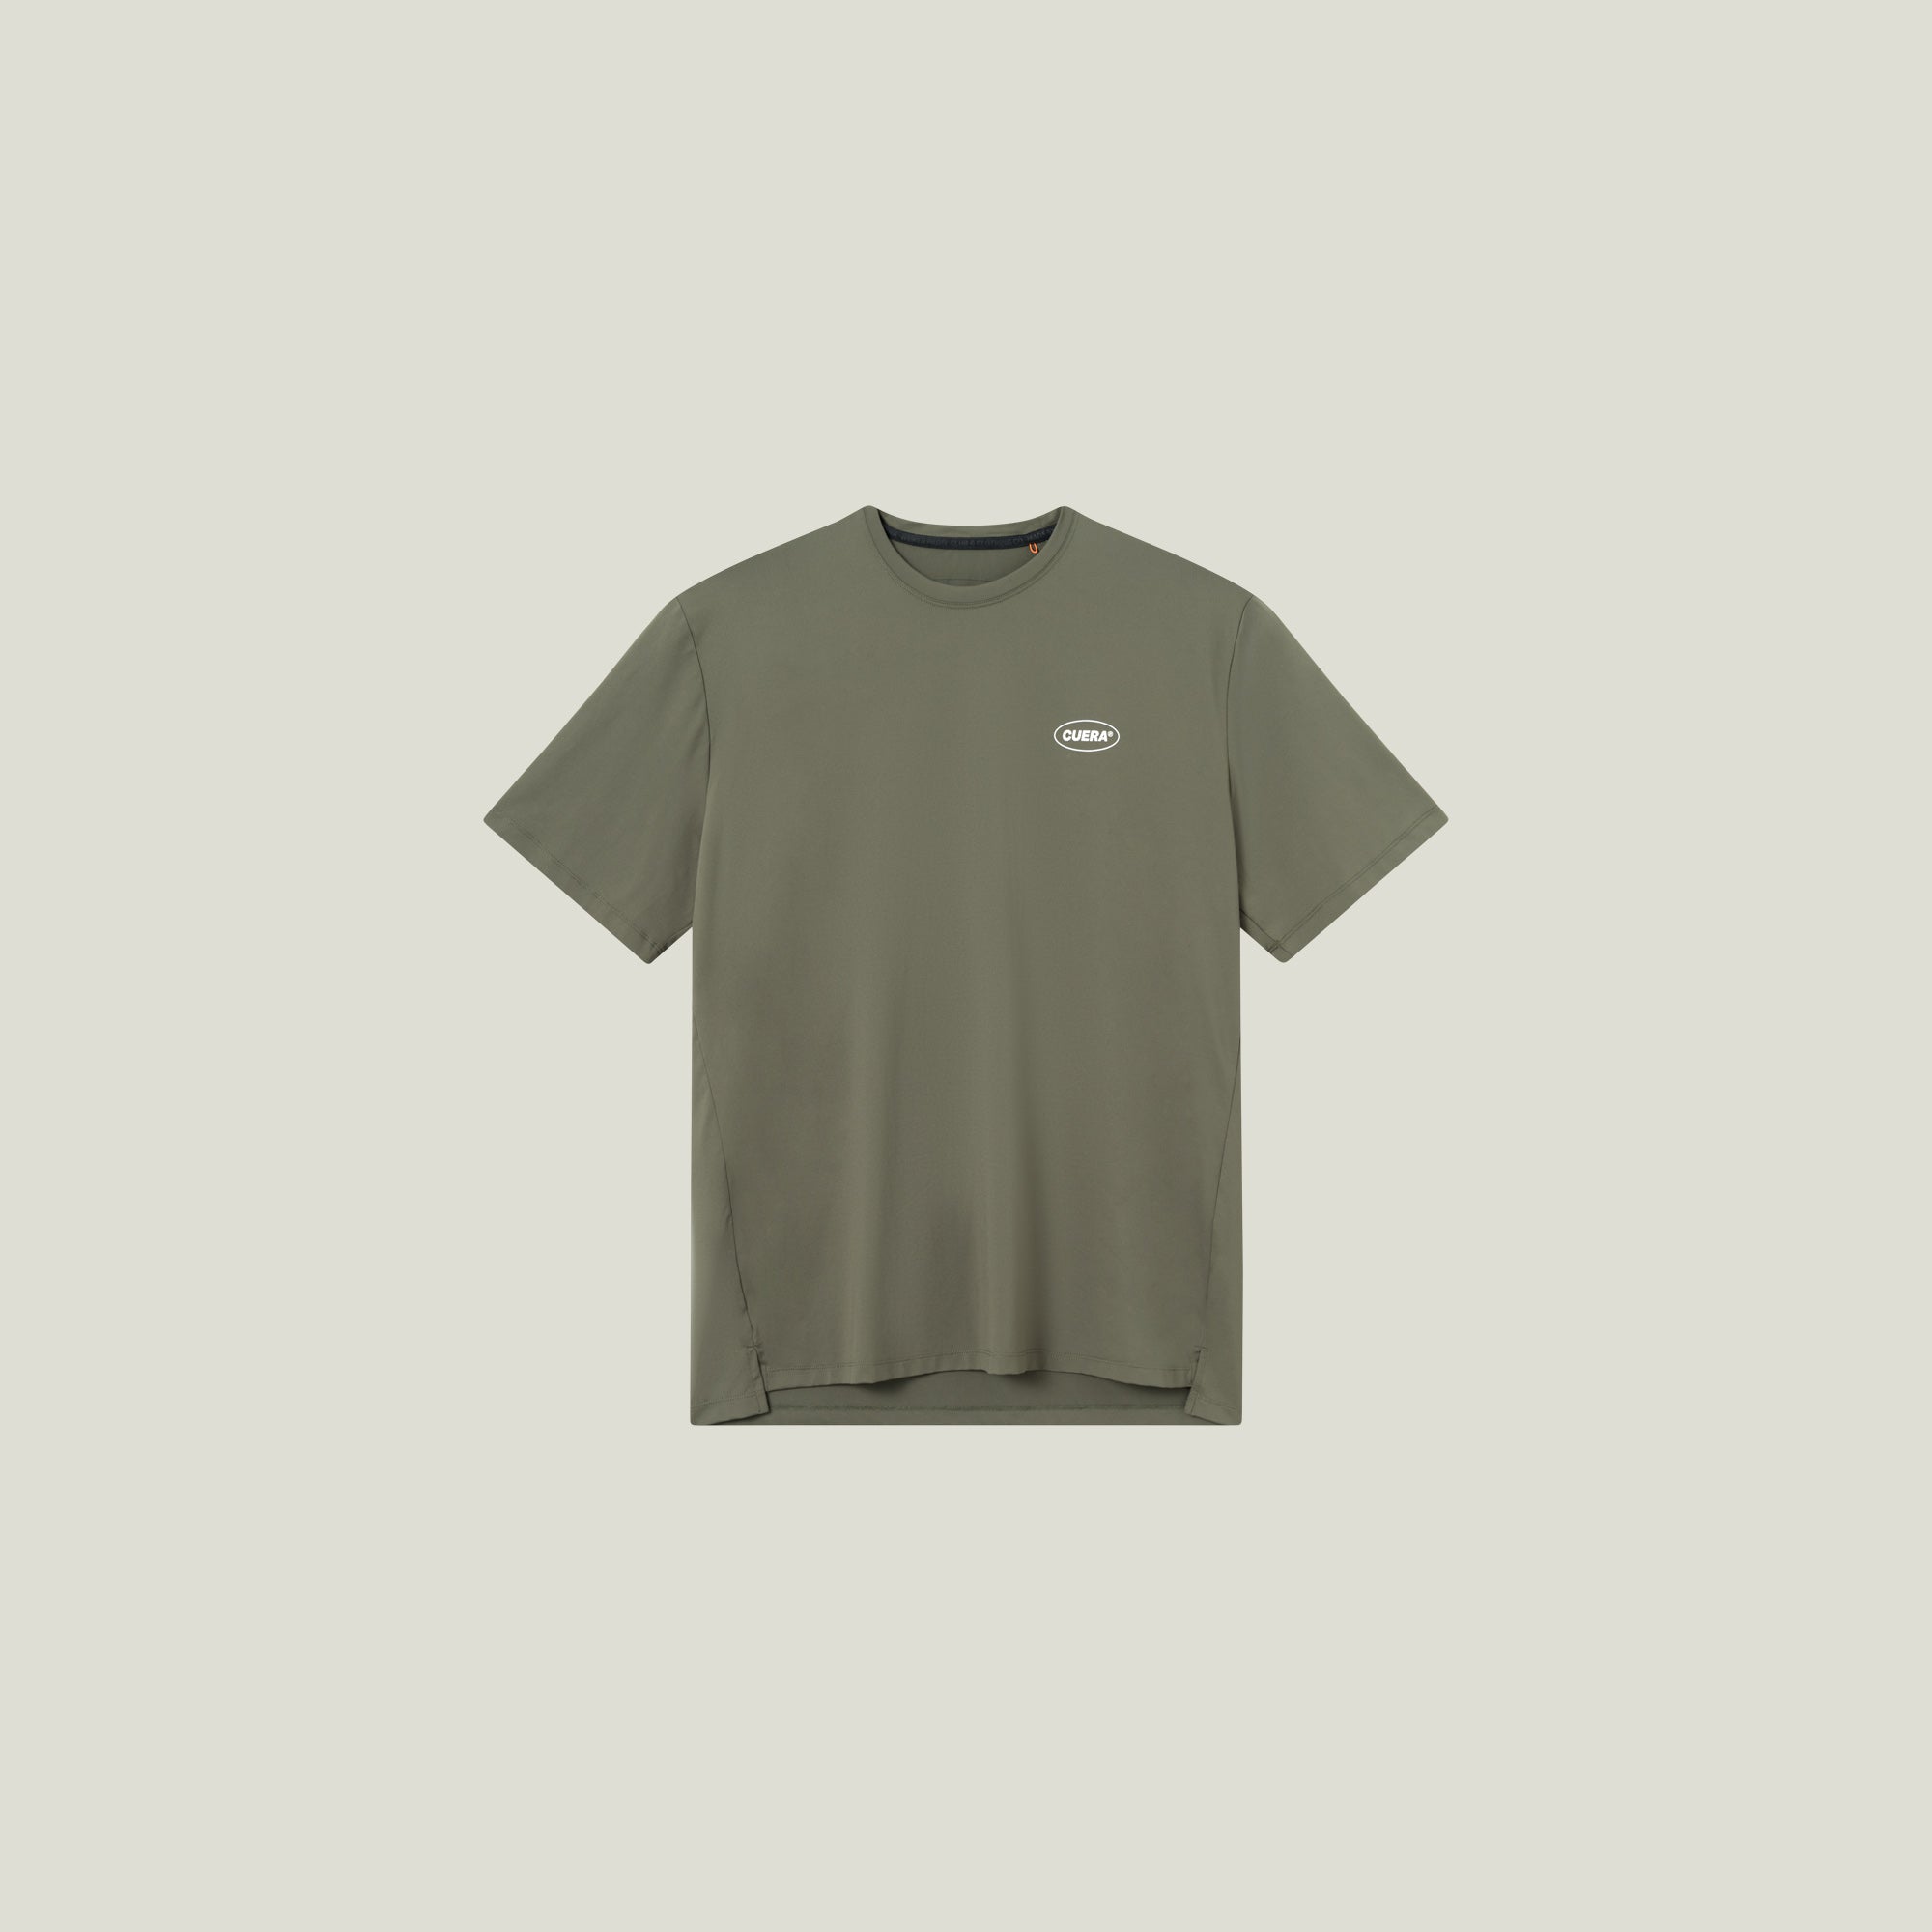 Se Cuera Oncourt Made T-shirt (Army) - XXL hos Padellife